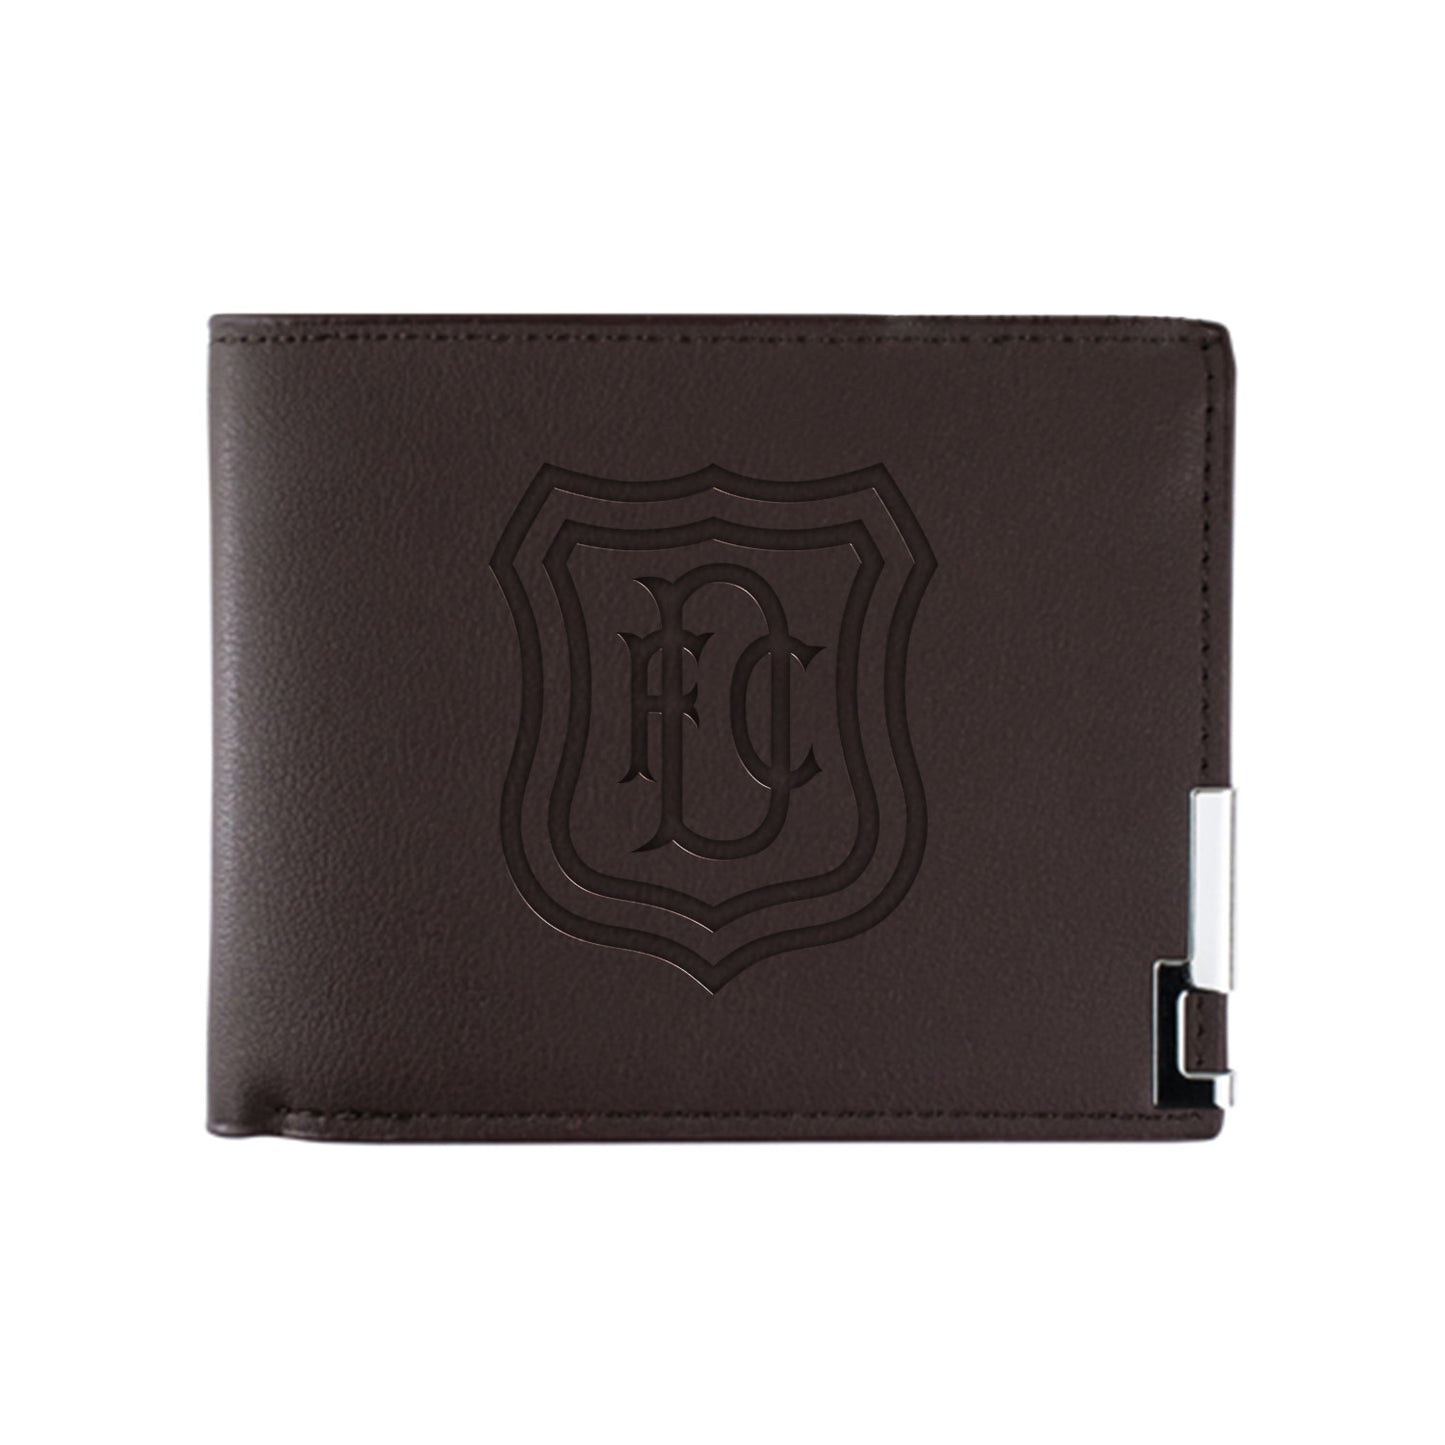 DFC Crest Leather Wallet Brown